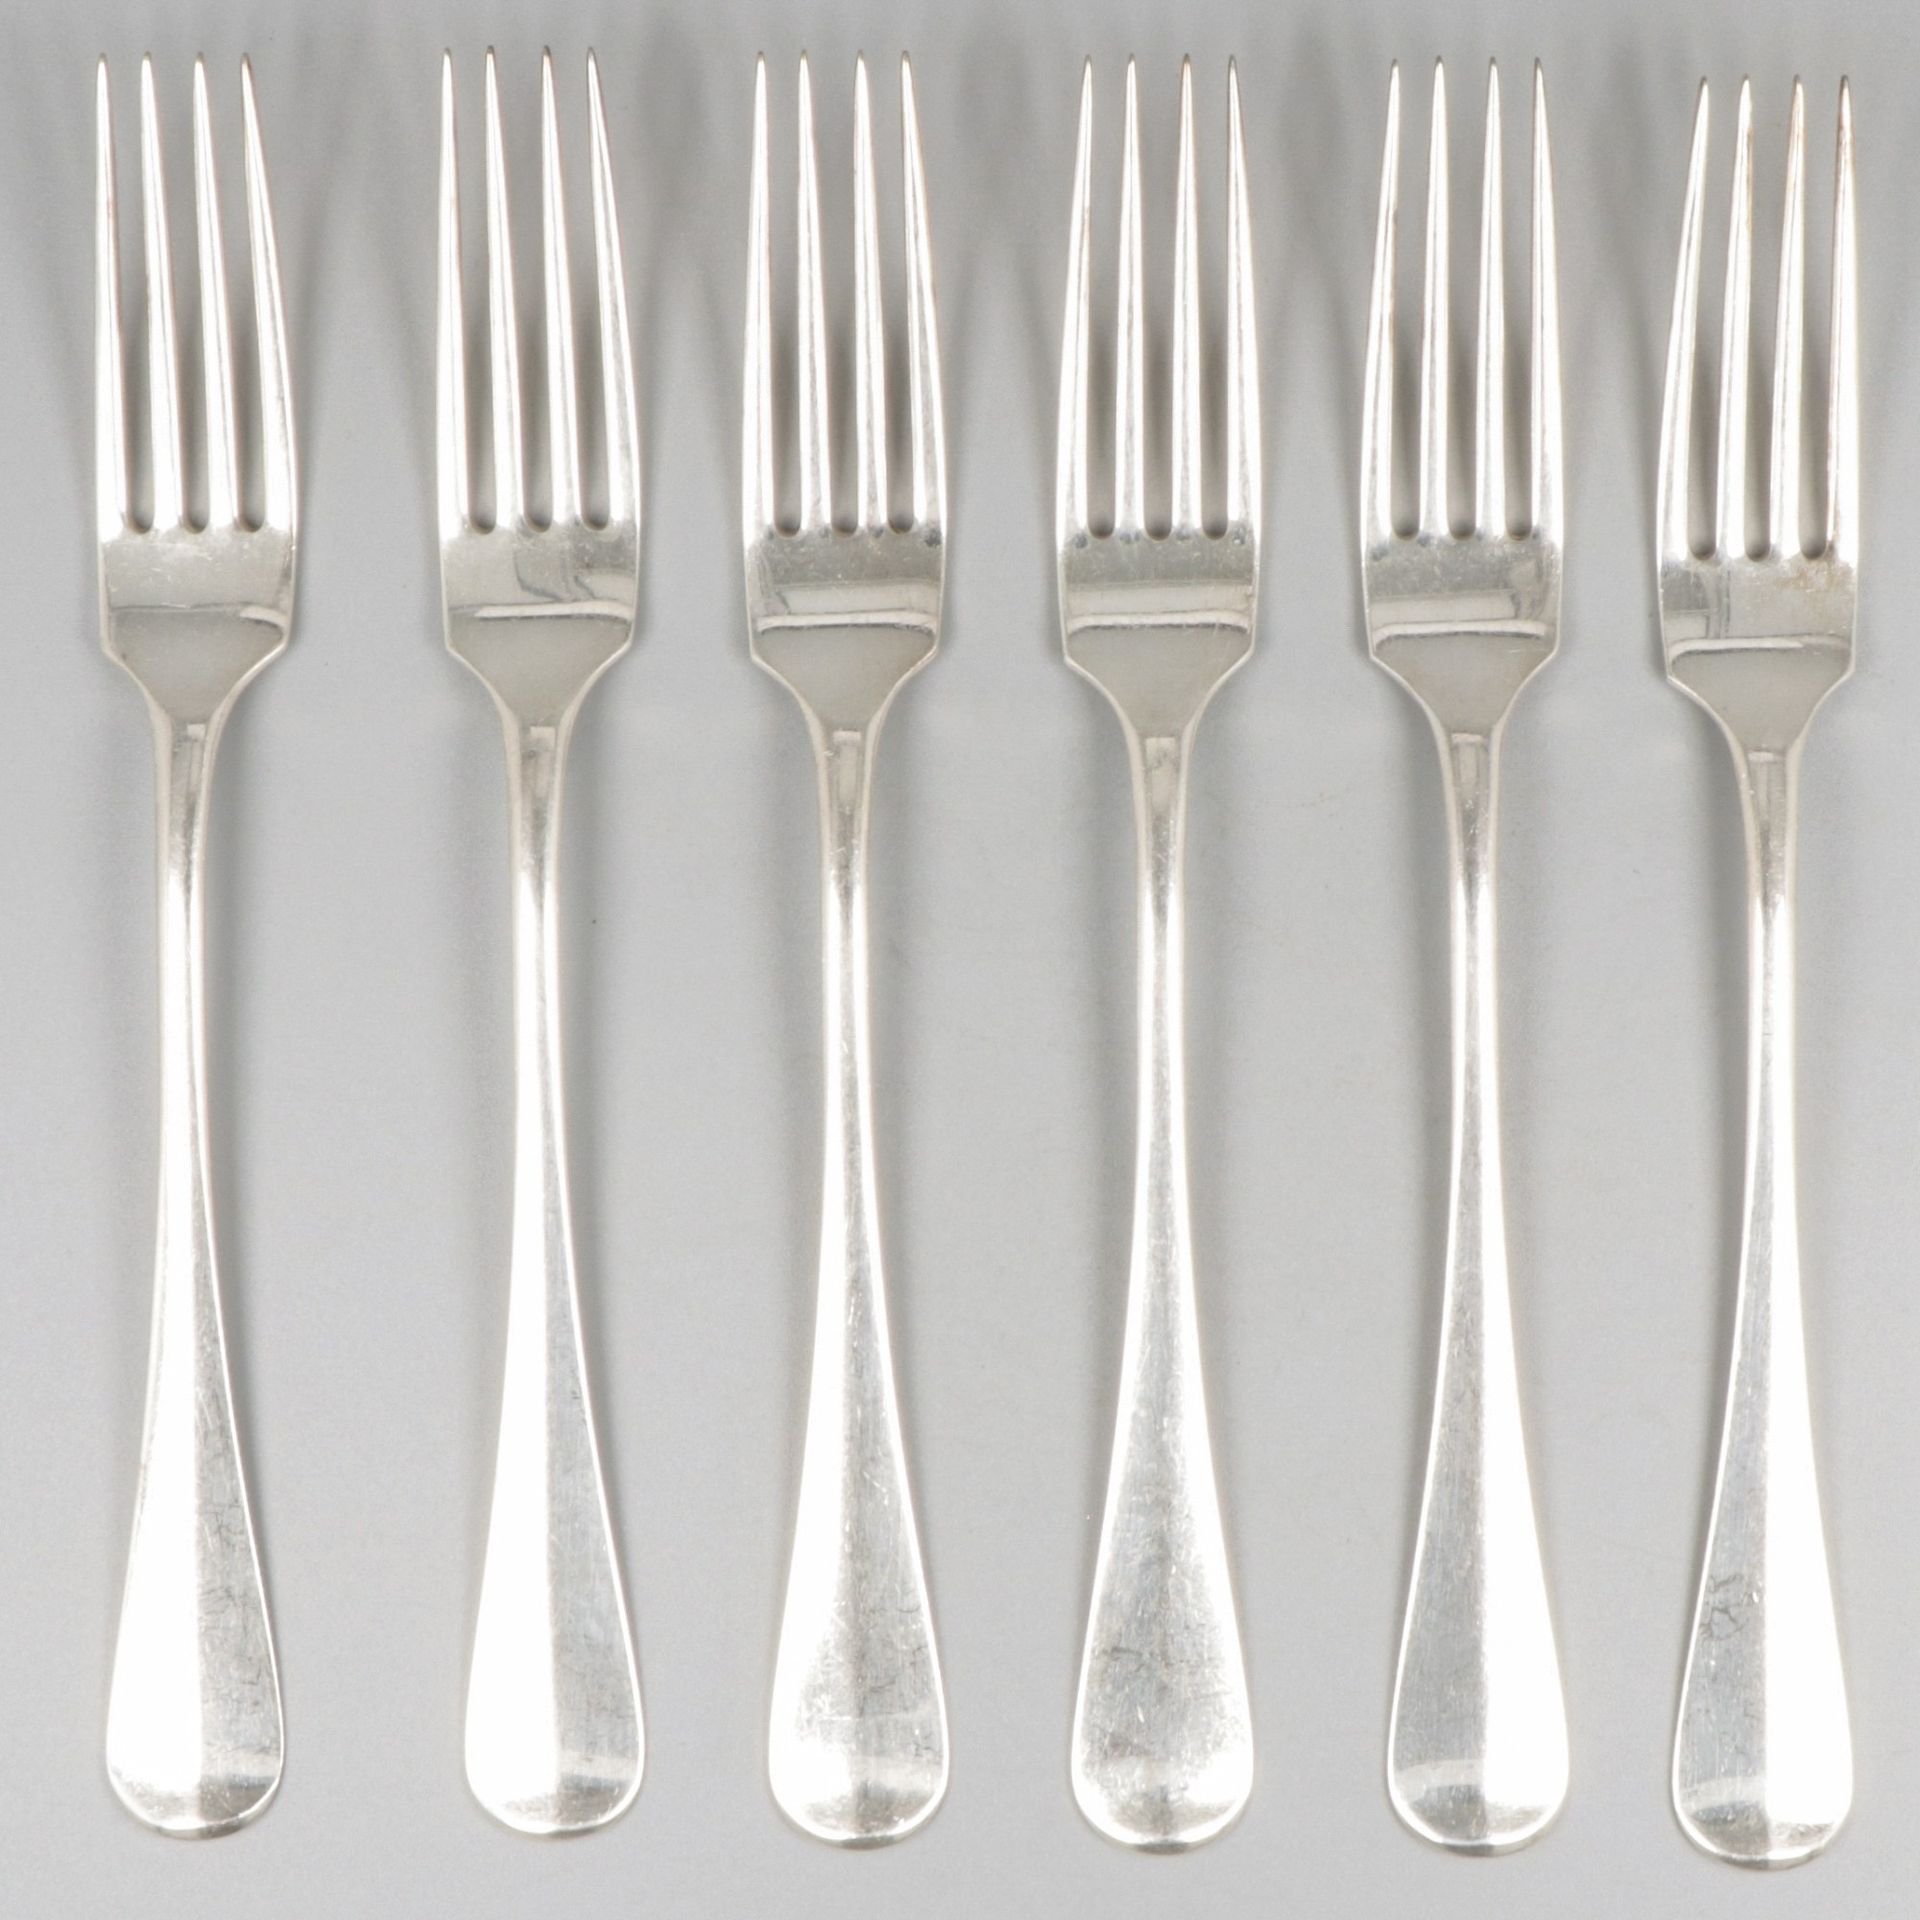 6-piece set dinner forks silver. "Hollands Glad" or Dutch smooth. The Netherland&hellip;